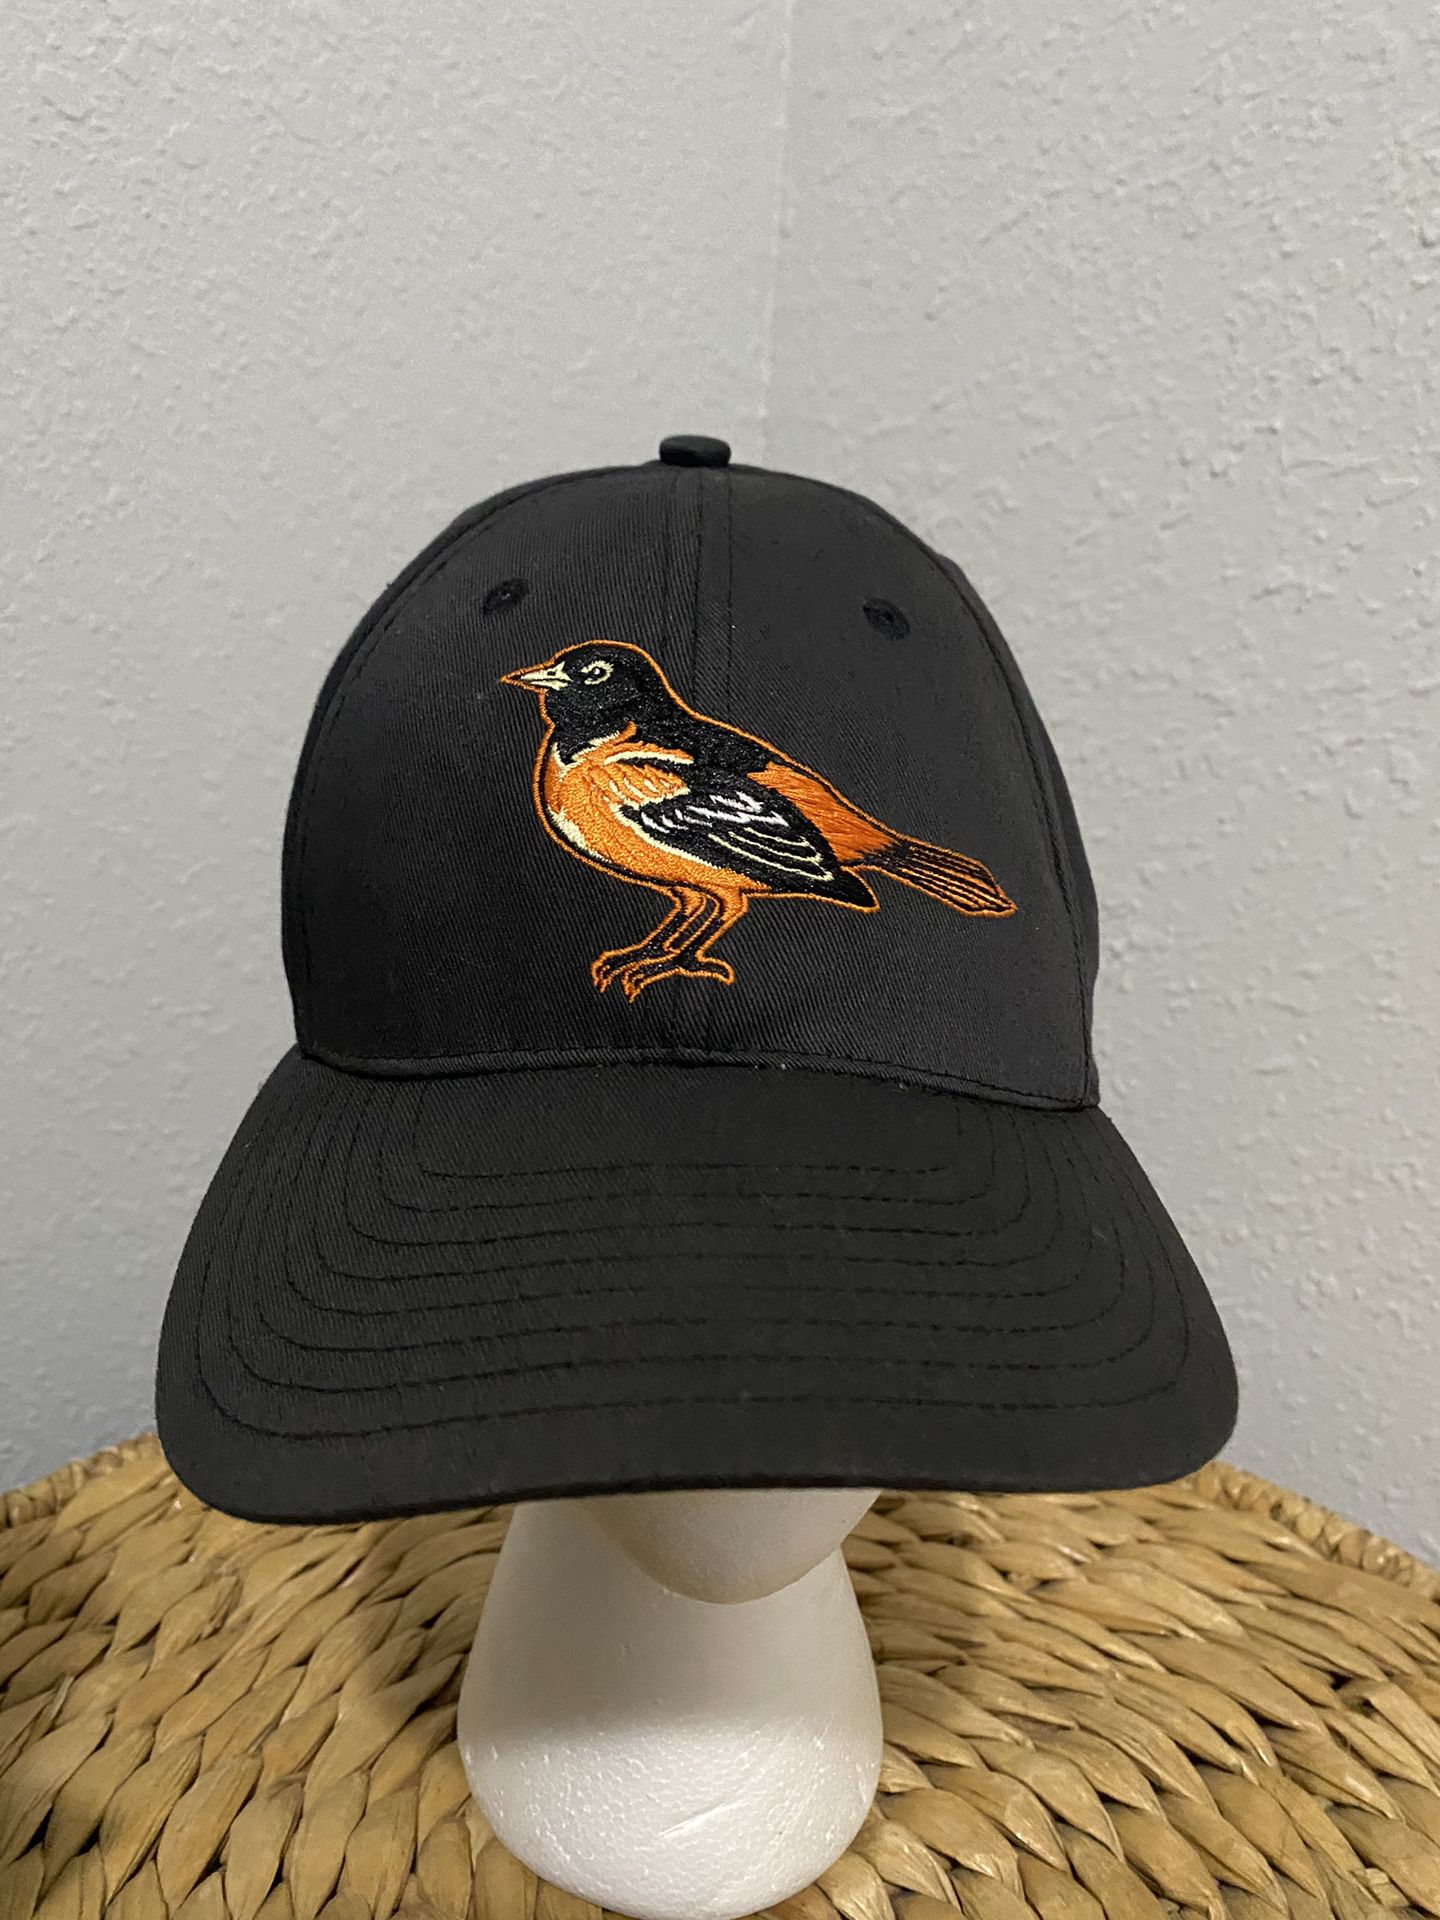 Baltimore Orioles New Era Hat